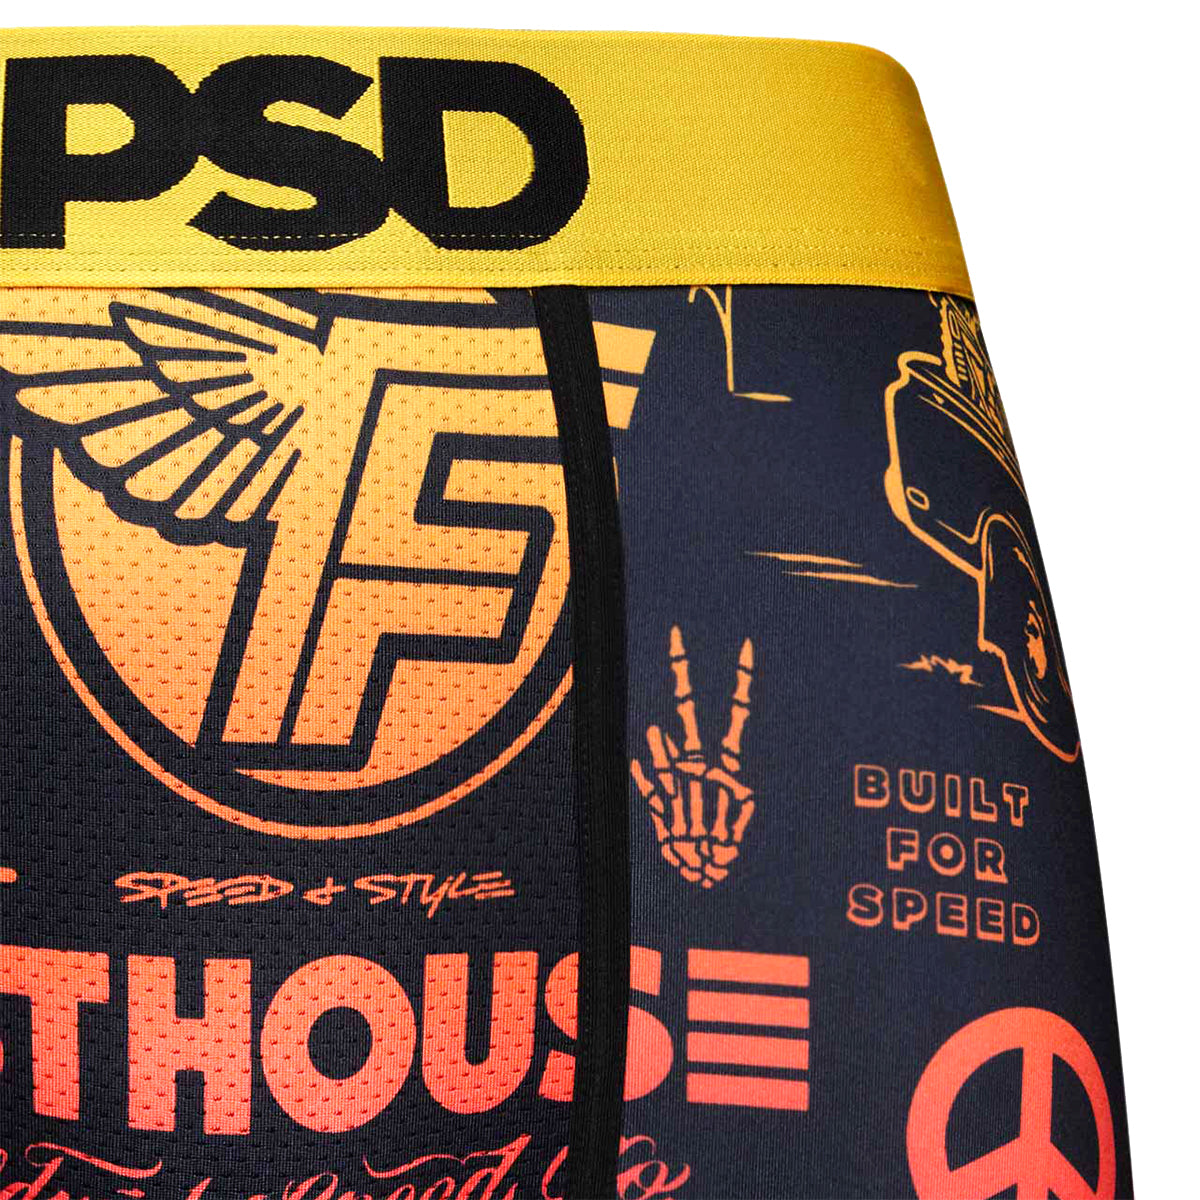 Fasthouse x PSD Flash Underwear